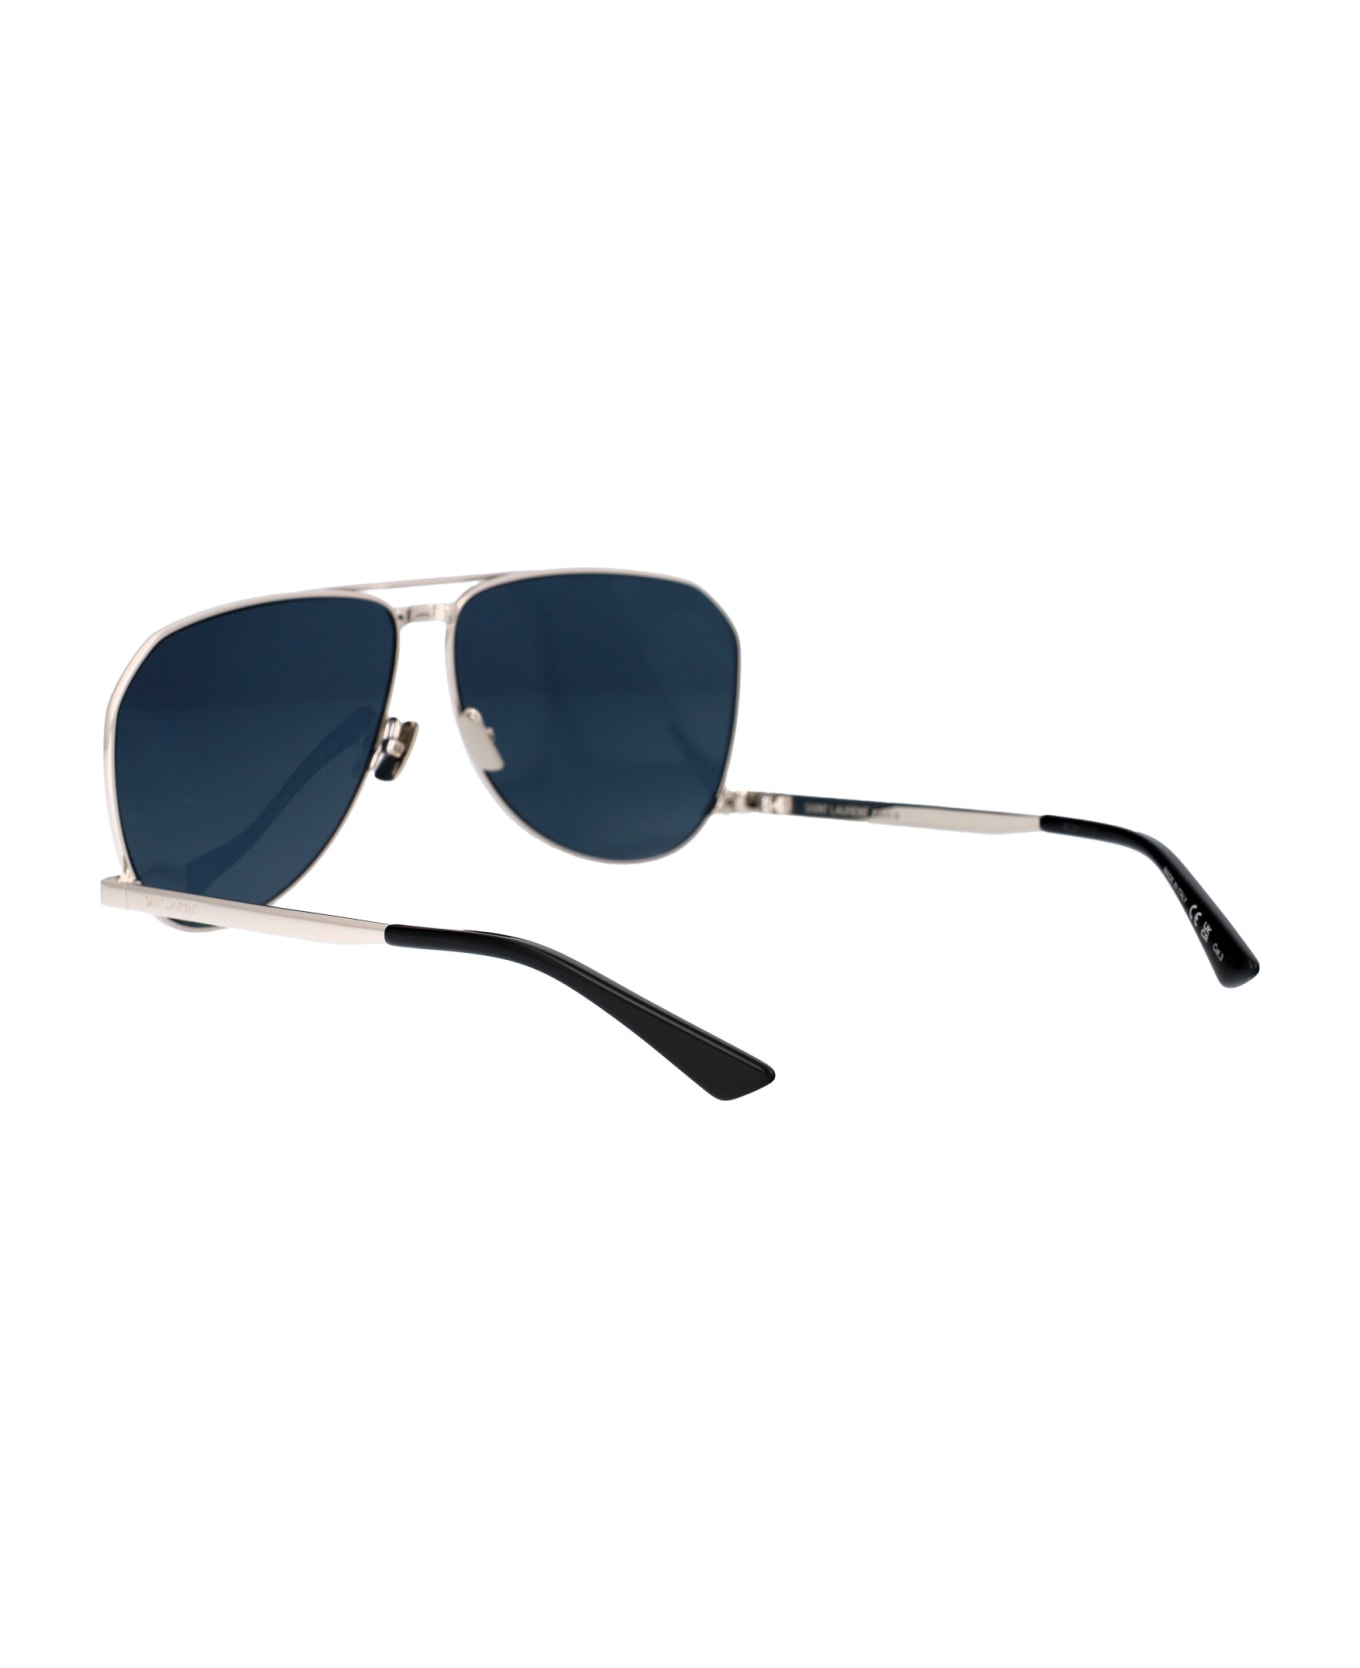 Saint Laurent Eyewear Sl 690 Dust Sunglasses - 003 SILVER SILVER BLUE